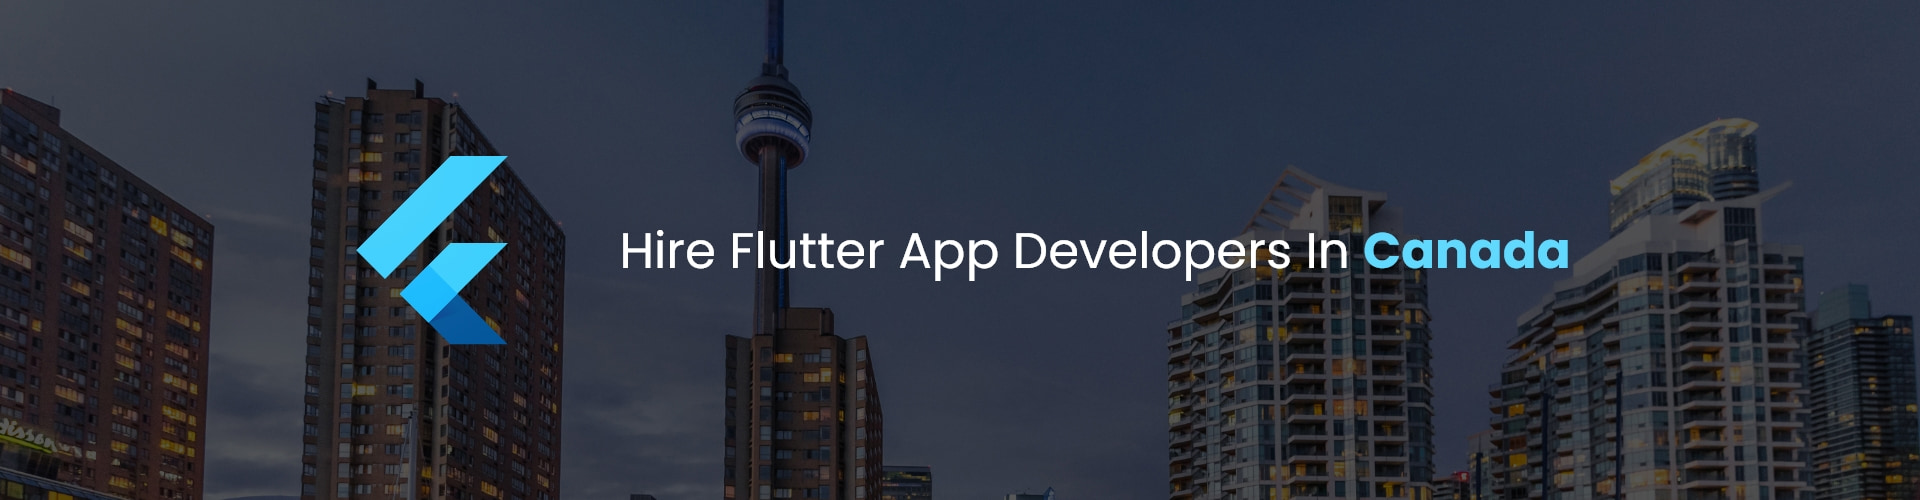 hire flutter app developers in canada